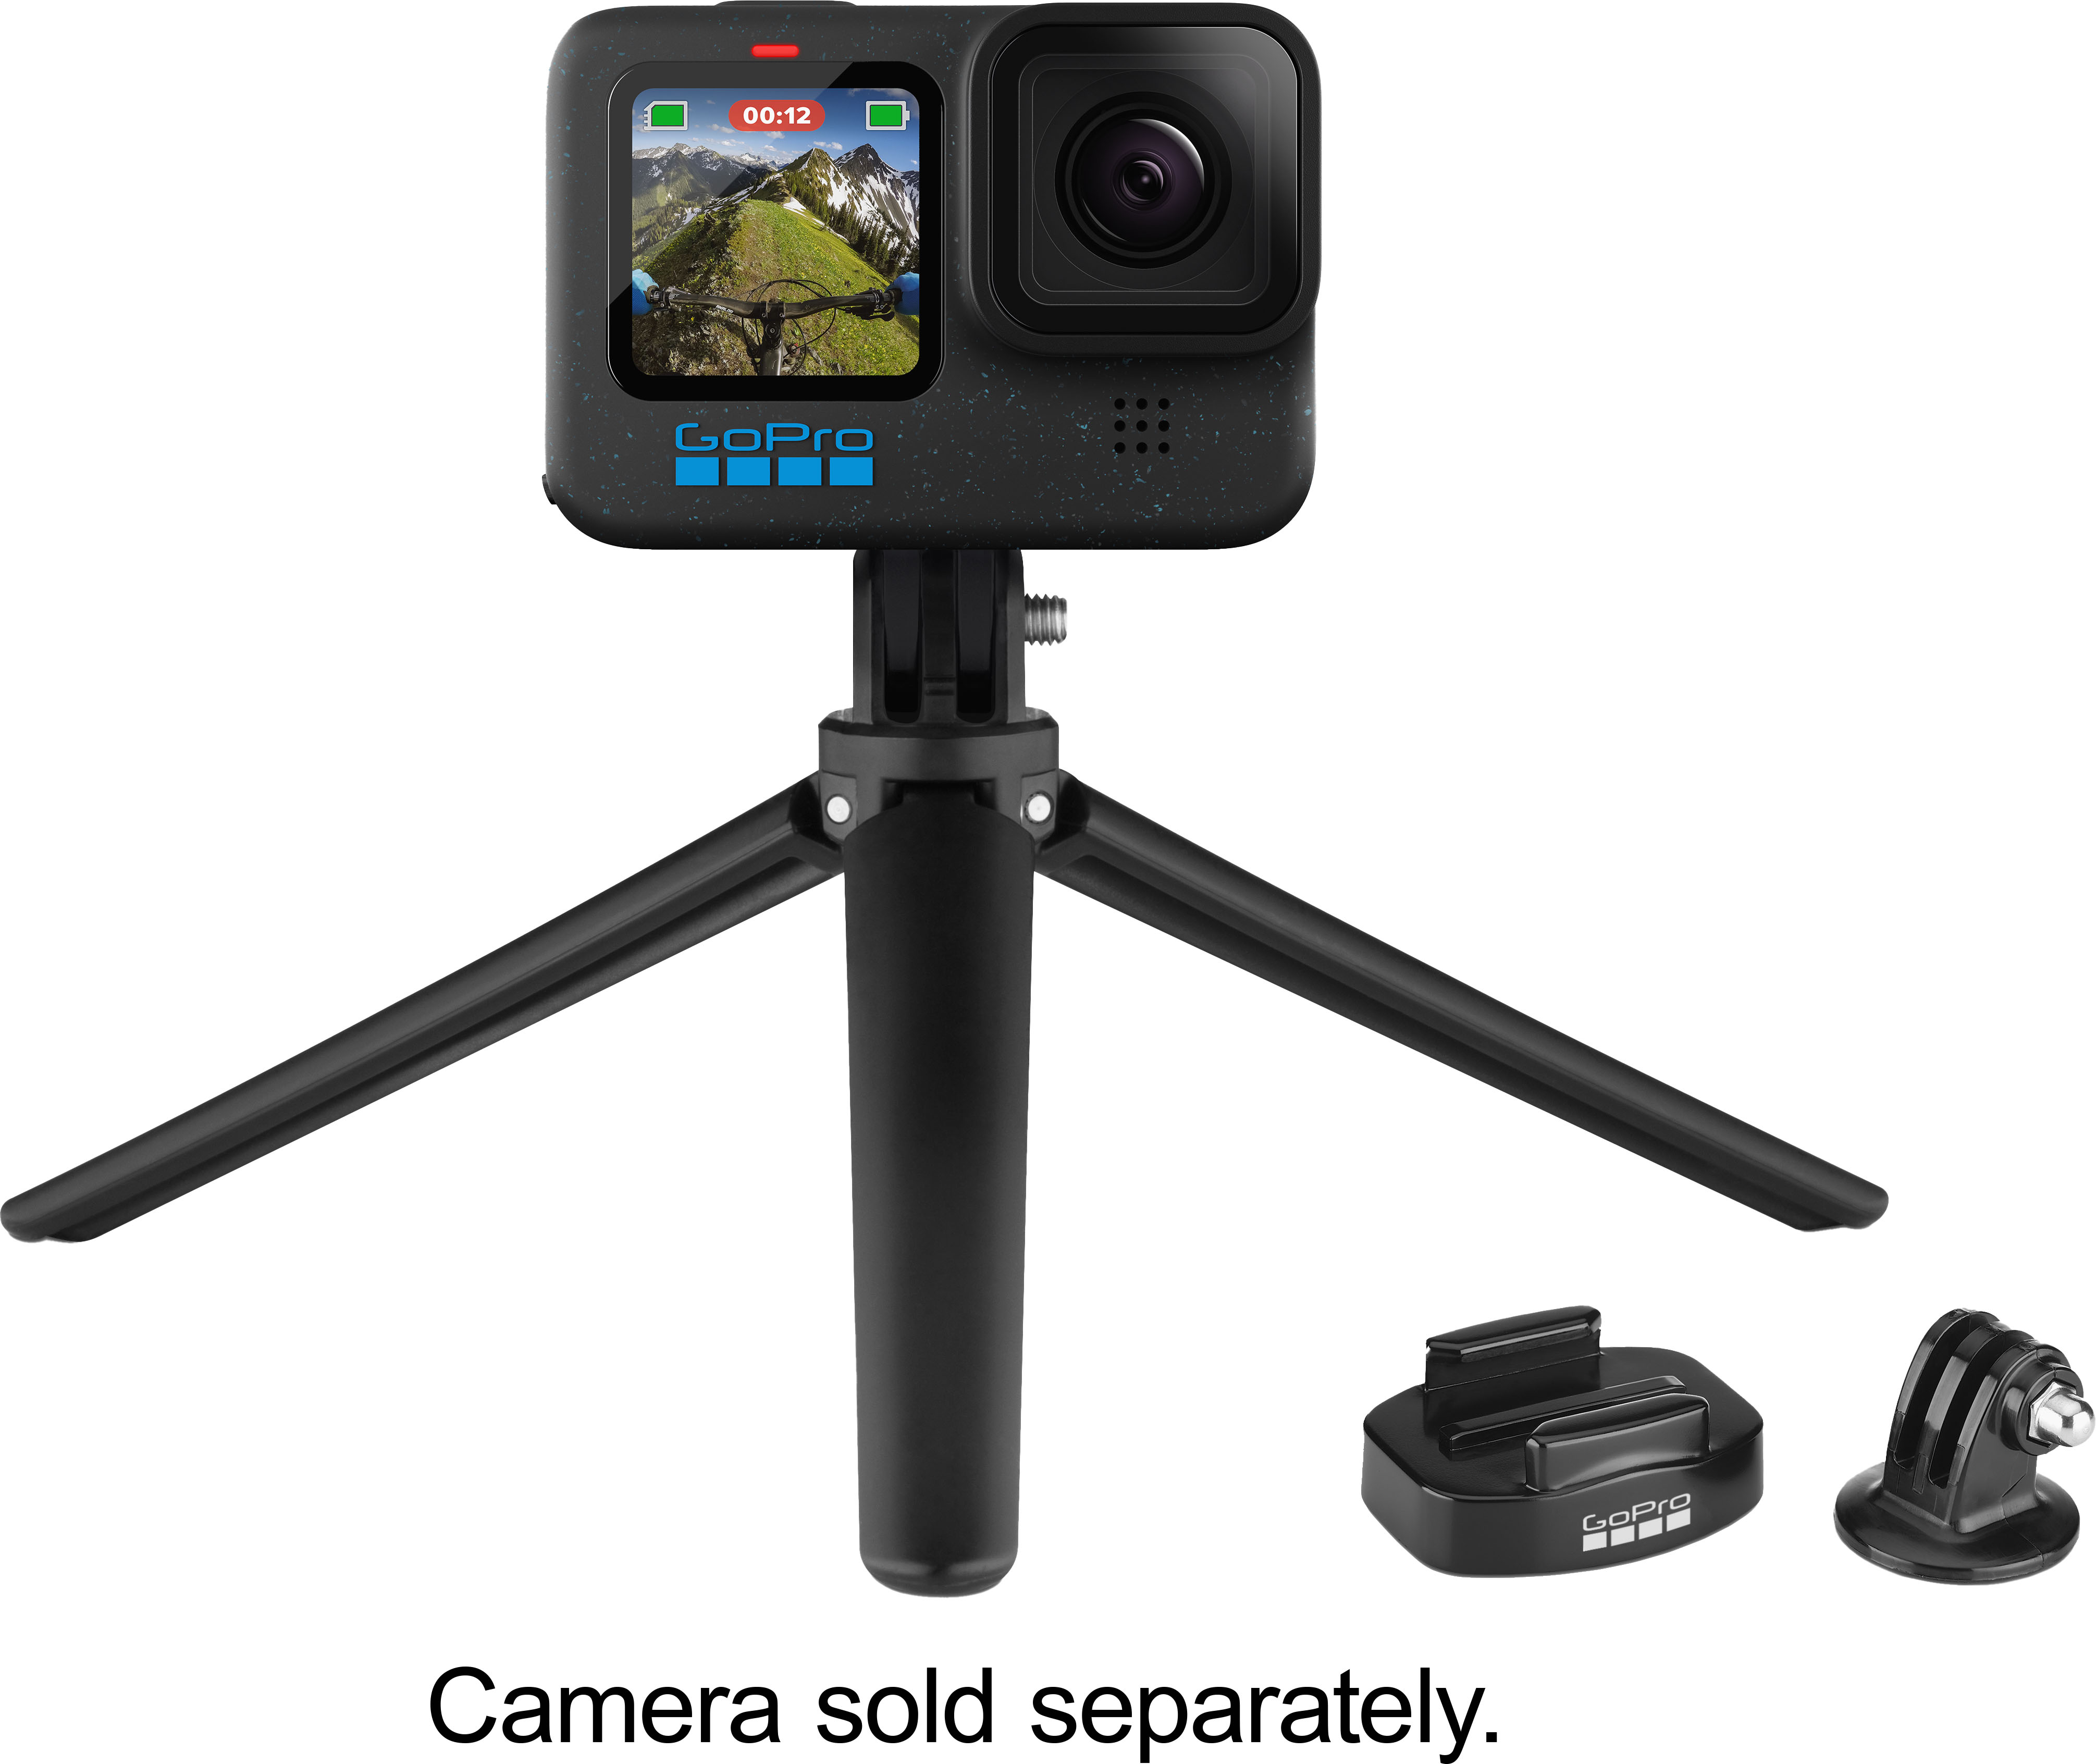  GoPro Tripod Mounts (All GoPro Cameras) - Official GoPro  Mount, Black : Electronics